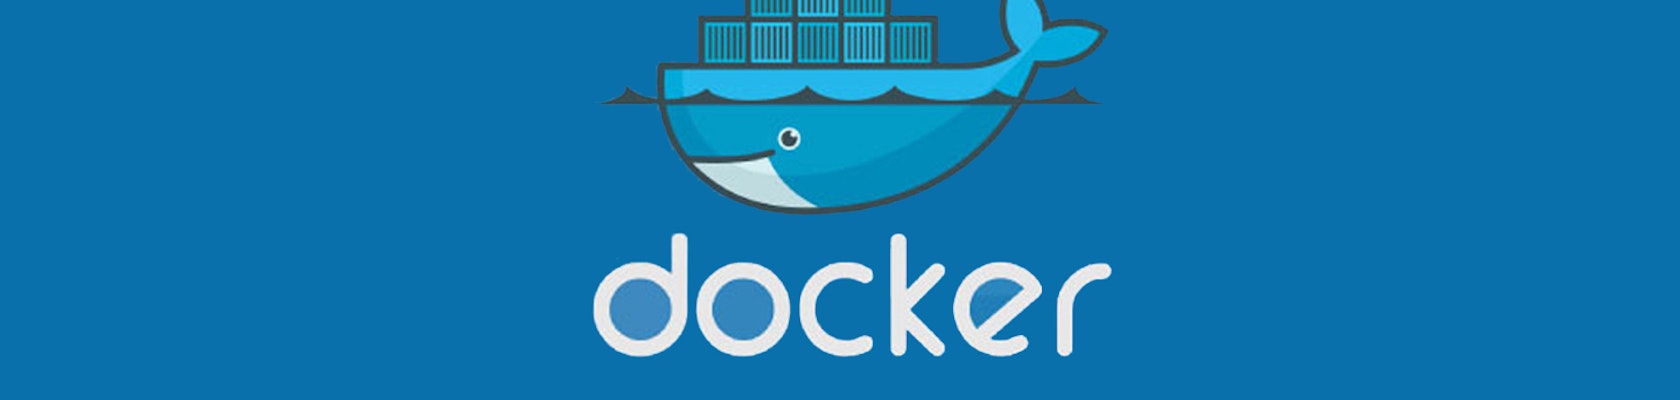 Docker Certification Hero Image